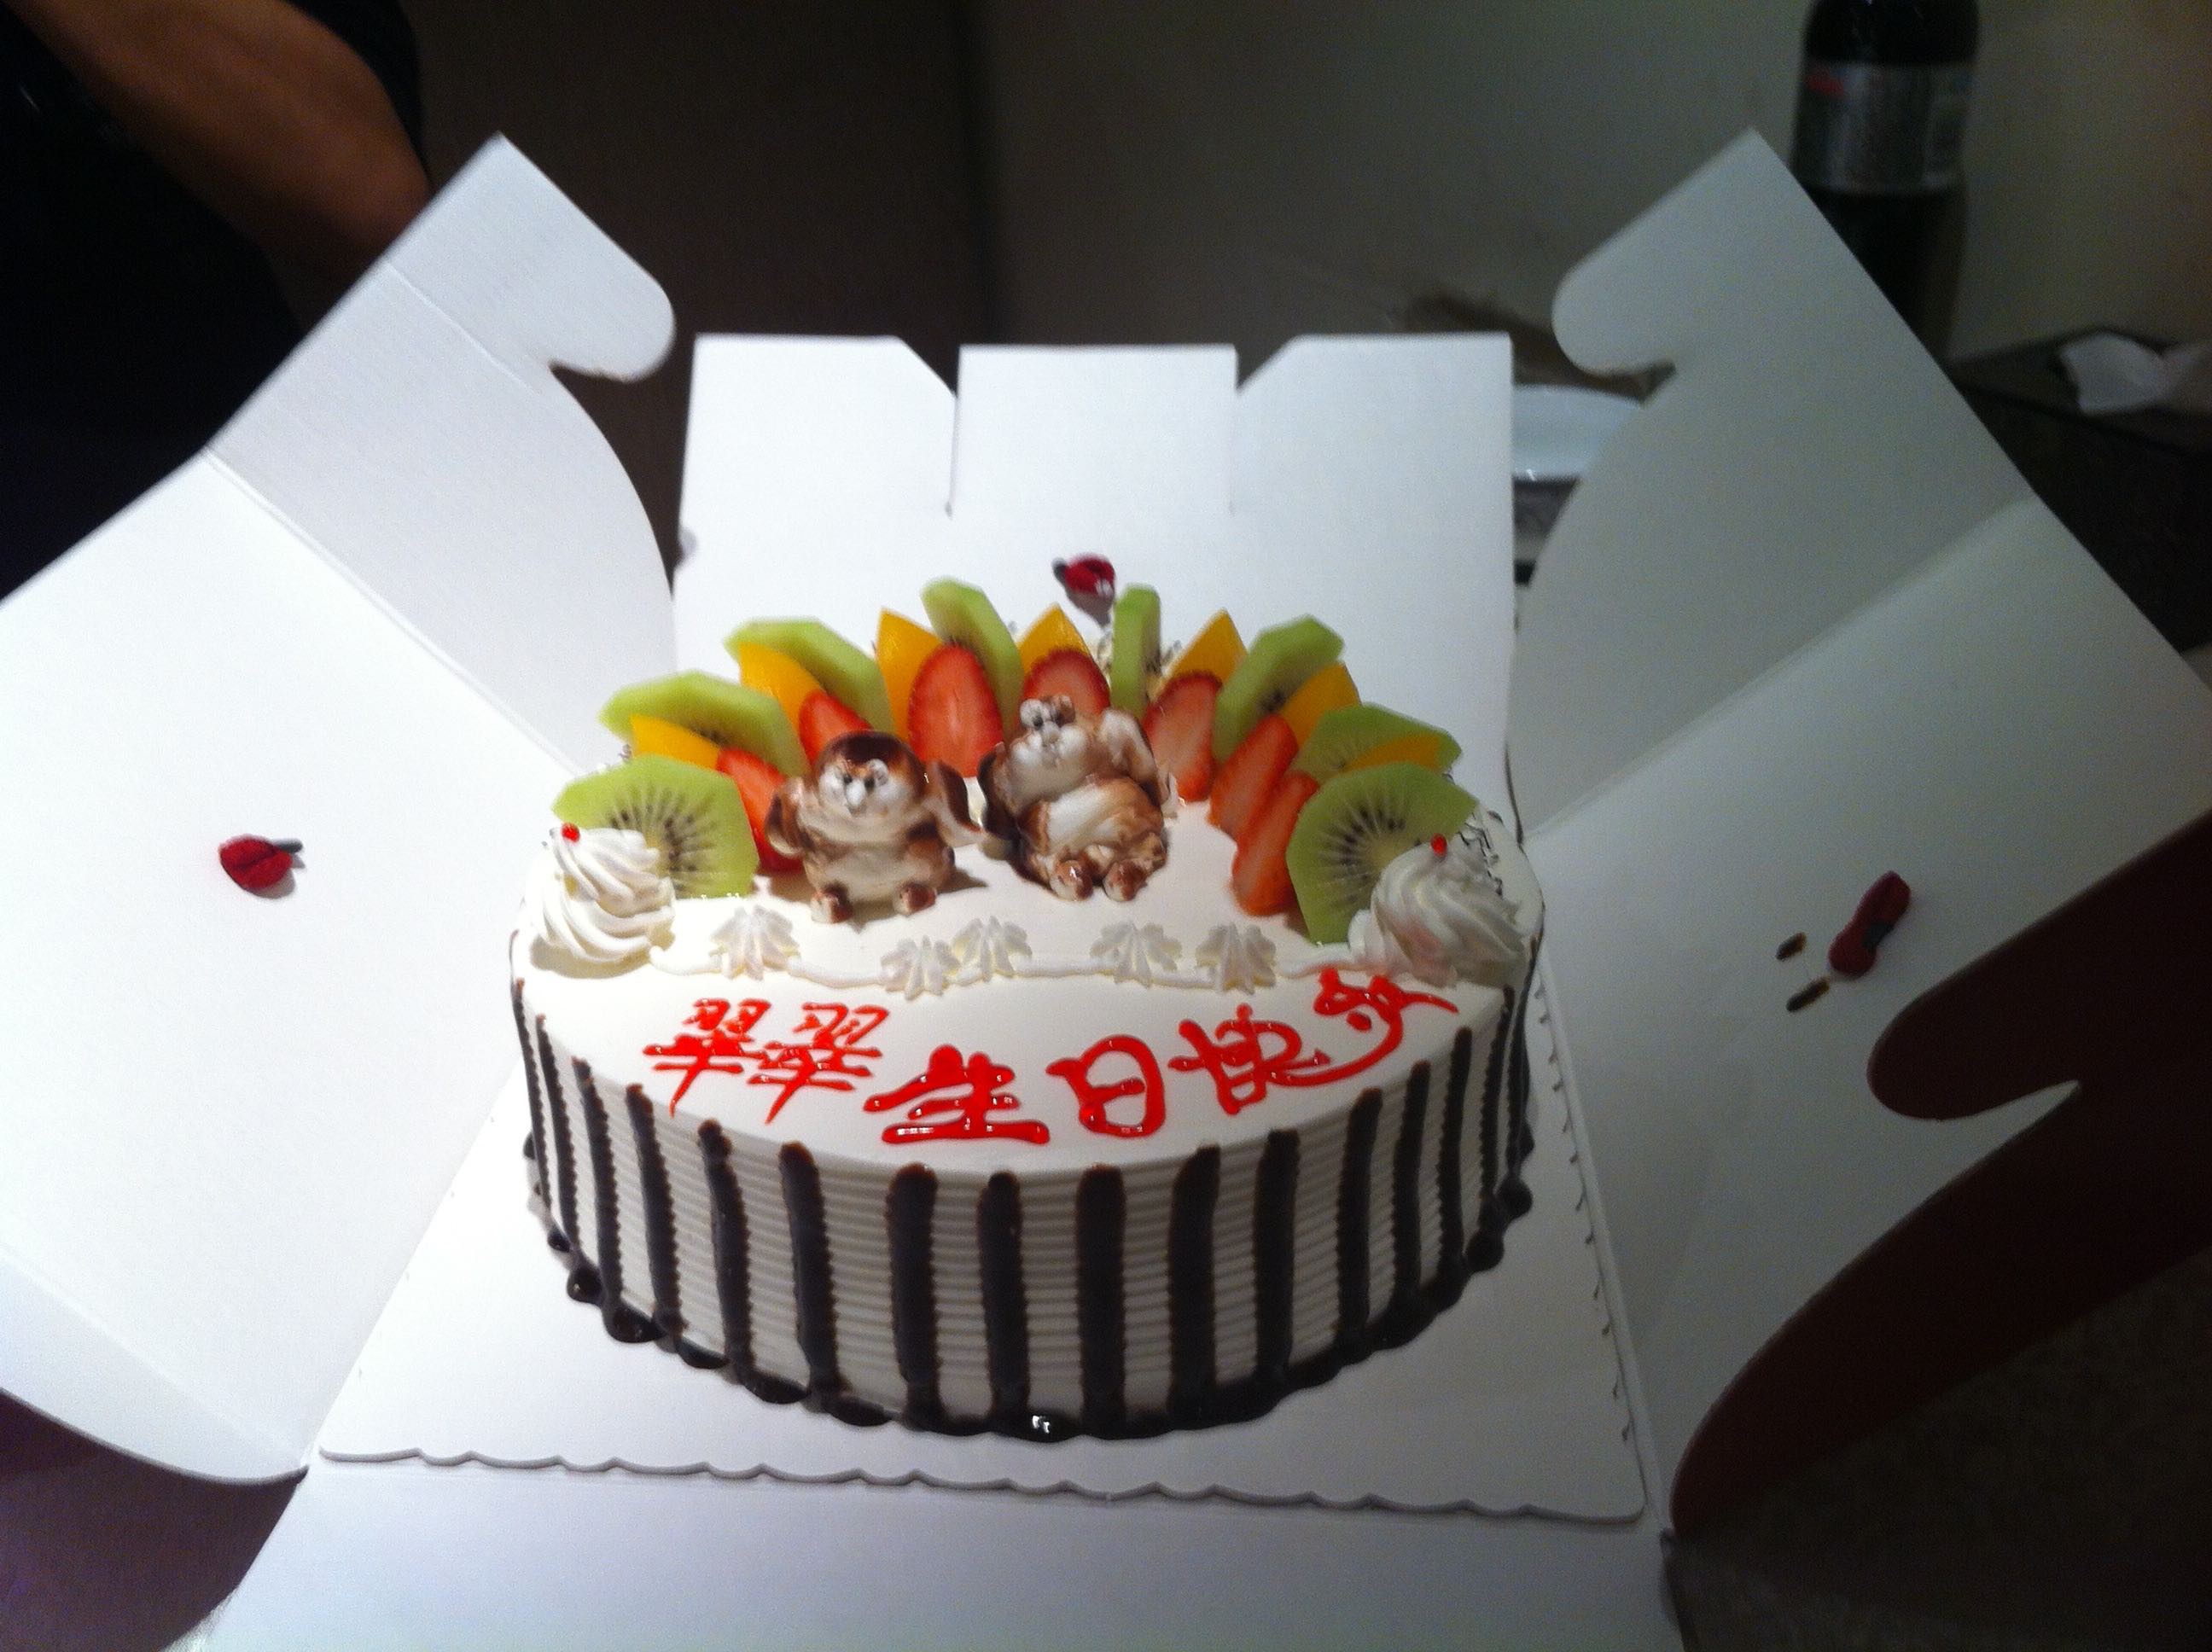 2013-09-24-the-cake.jpg